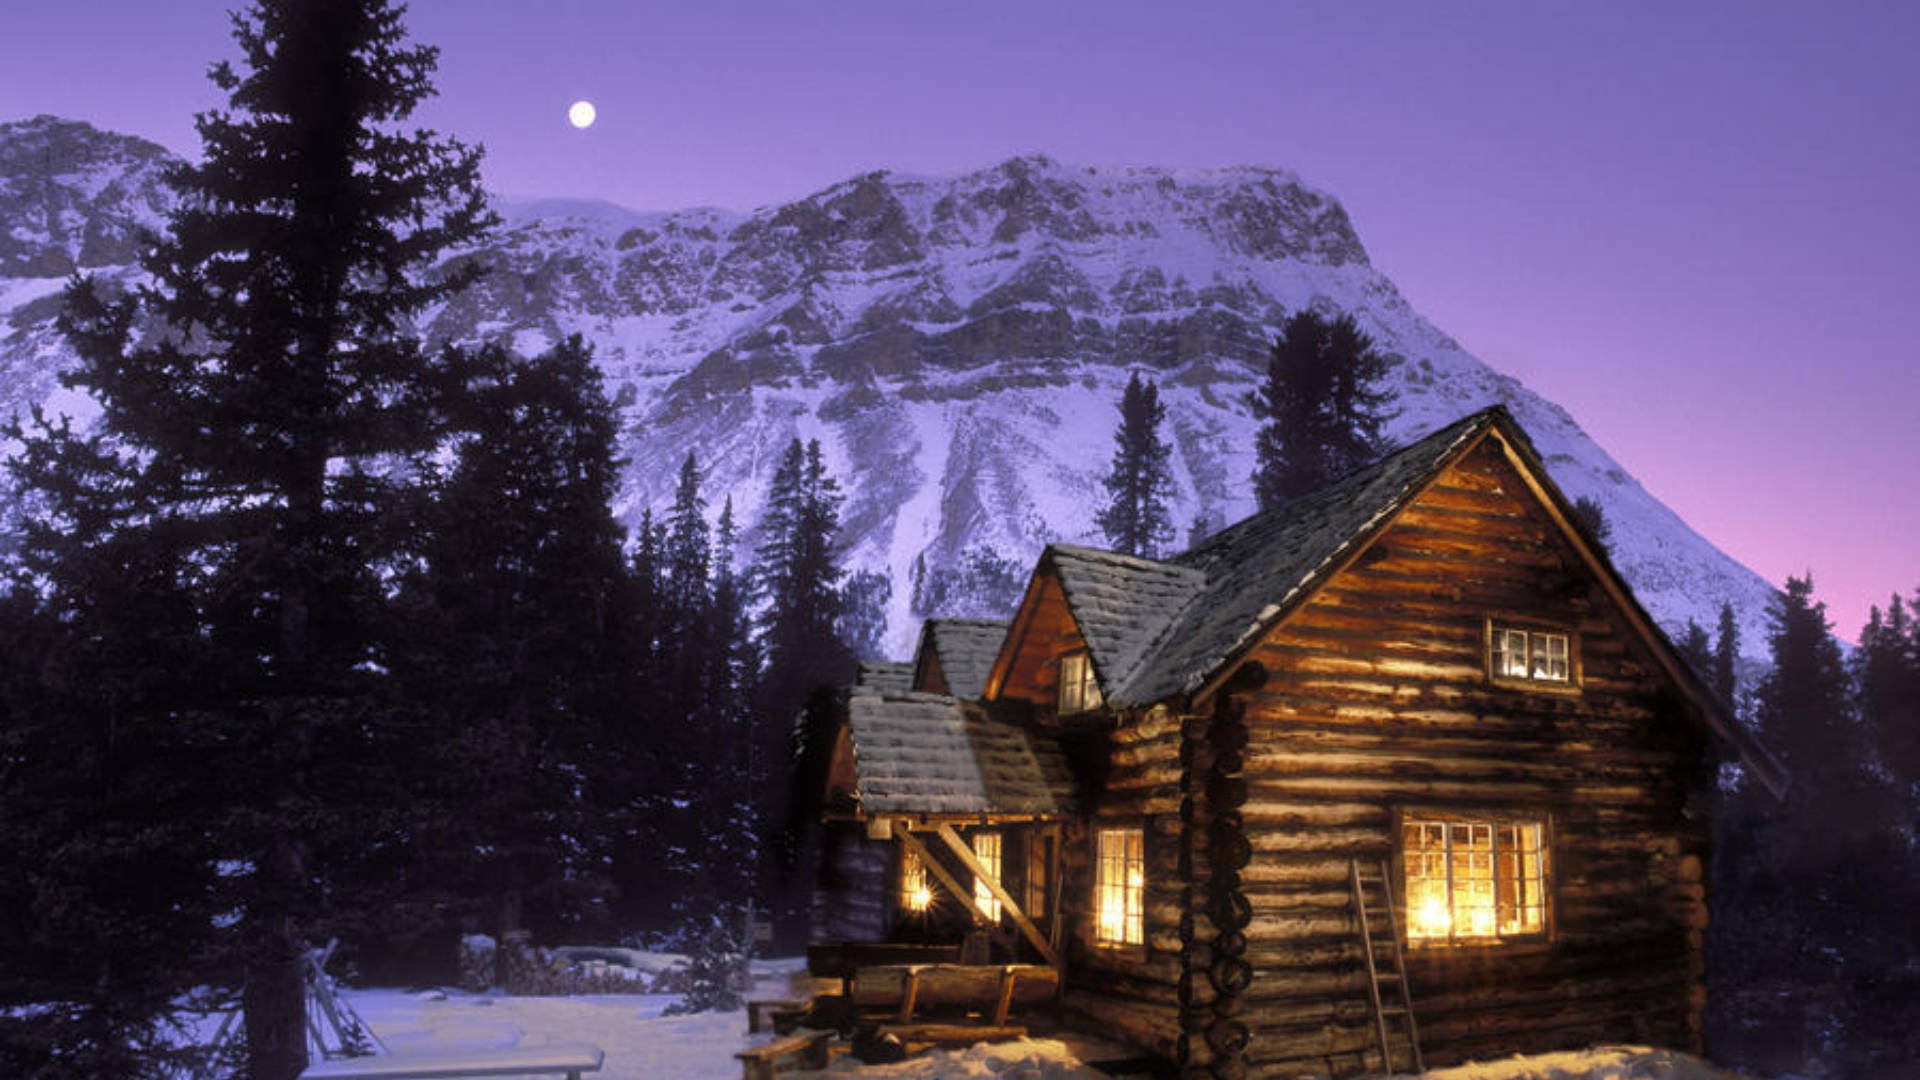 Download Snowy Mountain Behind Cozy Winter Cabin Wallpaper